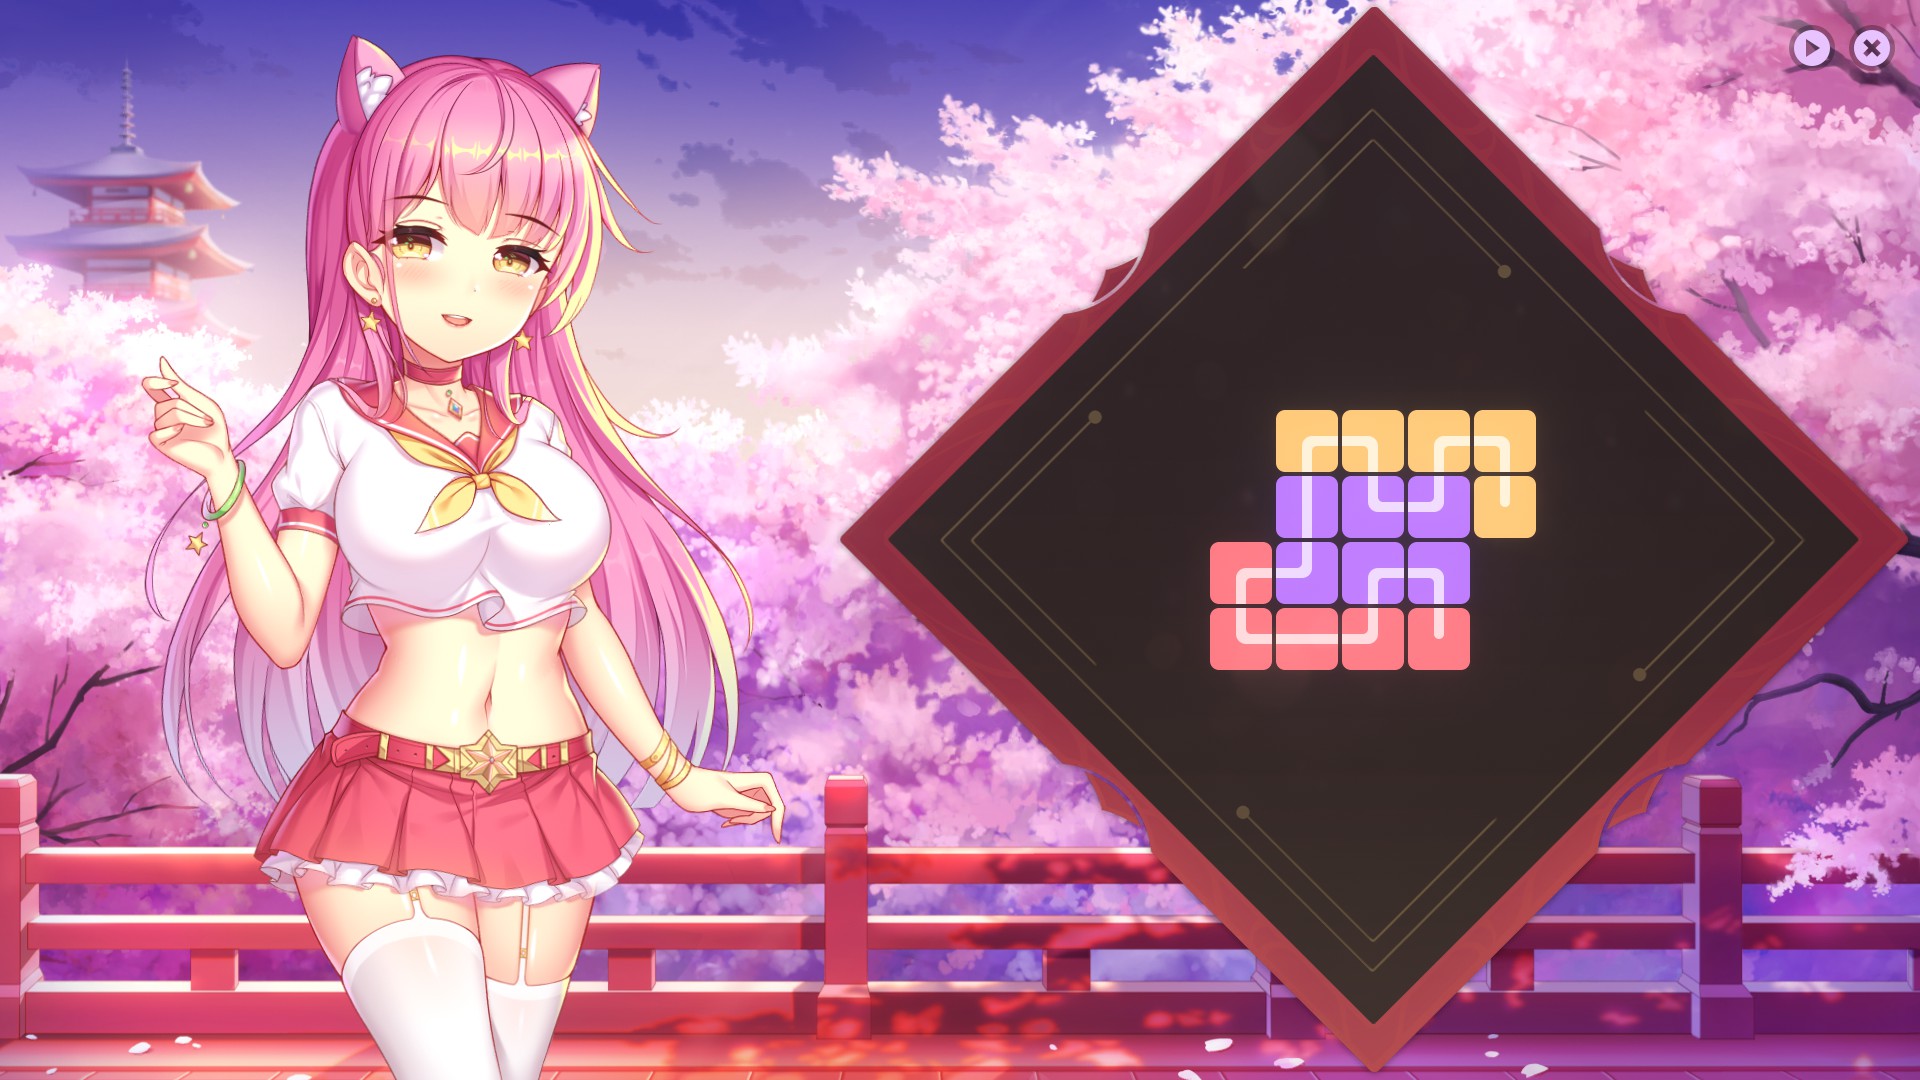 Sakura Hime 2 - Complete Achievement Guide +Walkthrough - Images of completed levels - 4E9CEBC